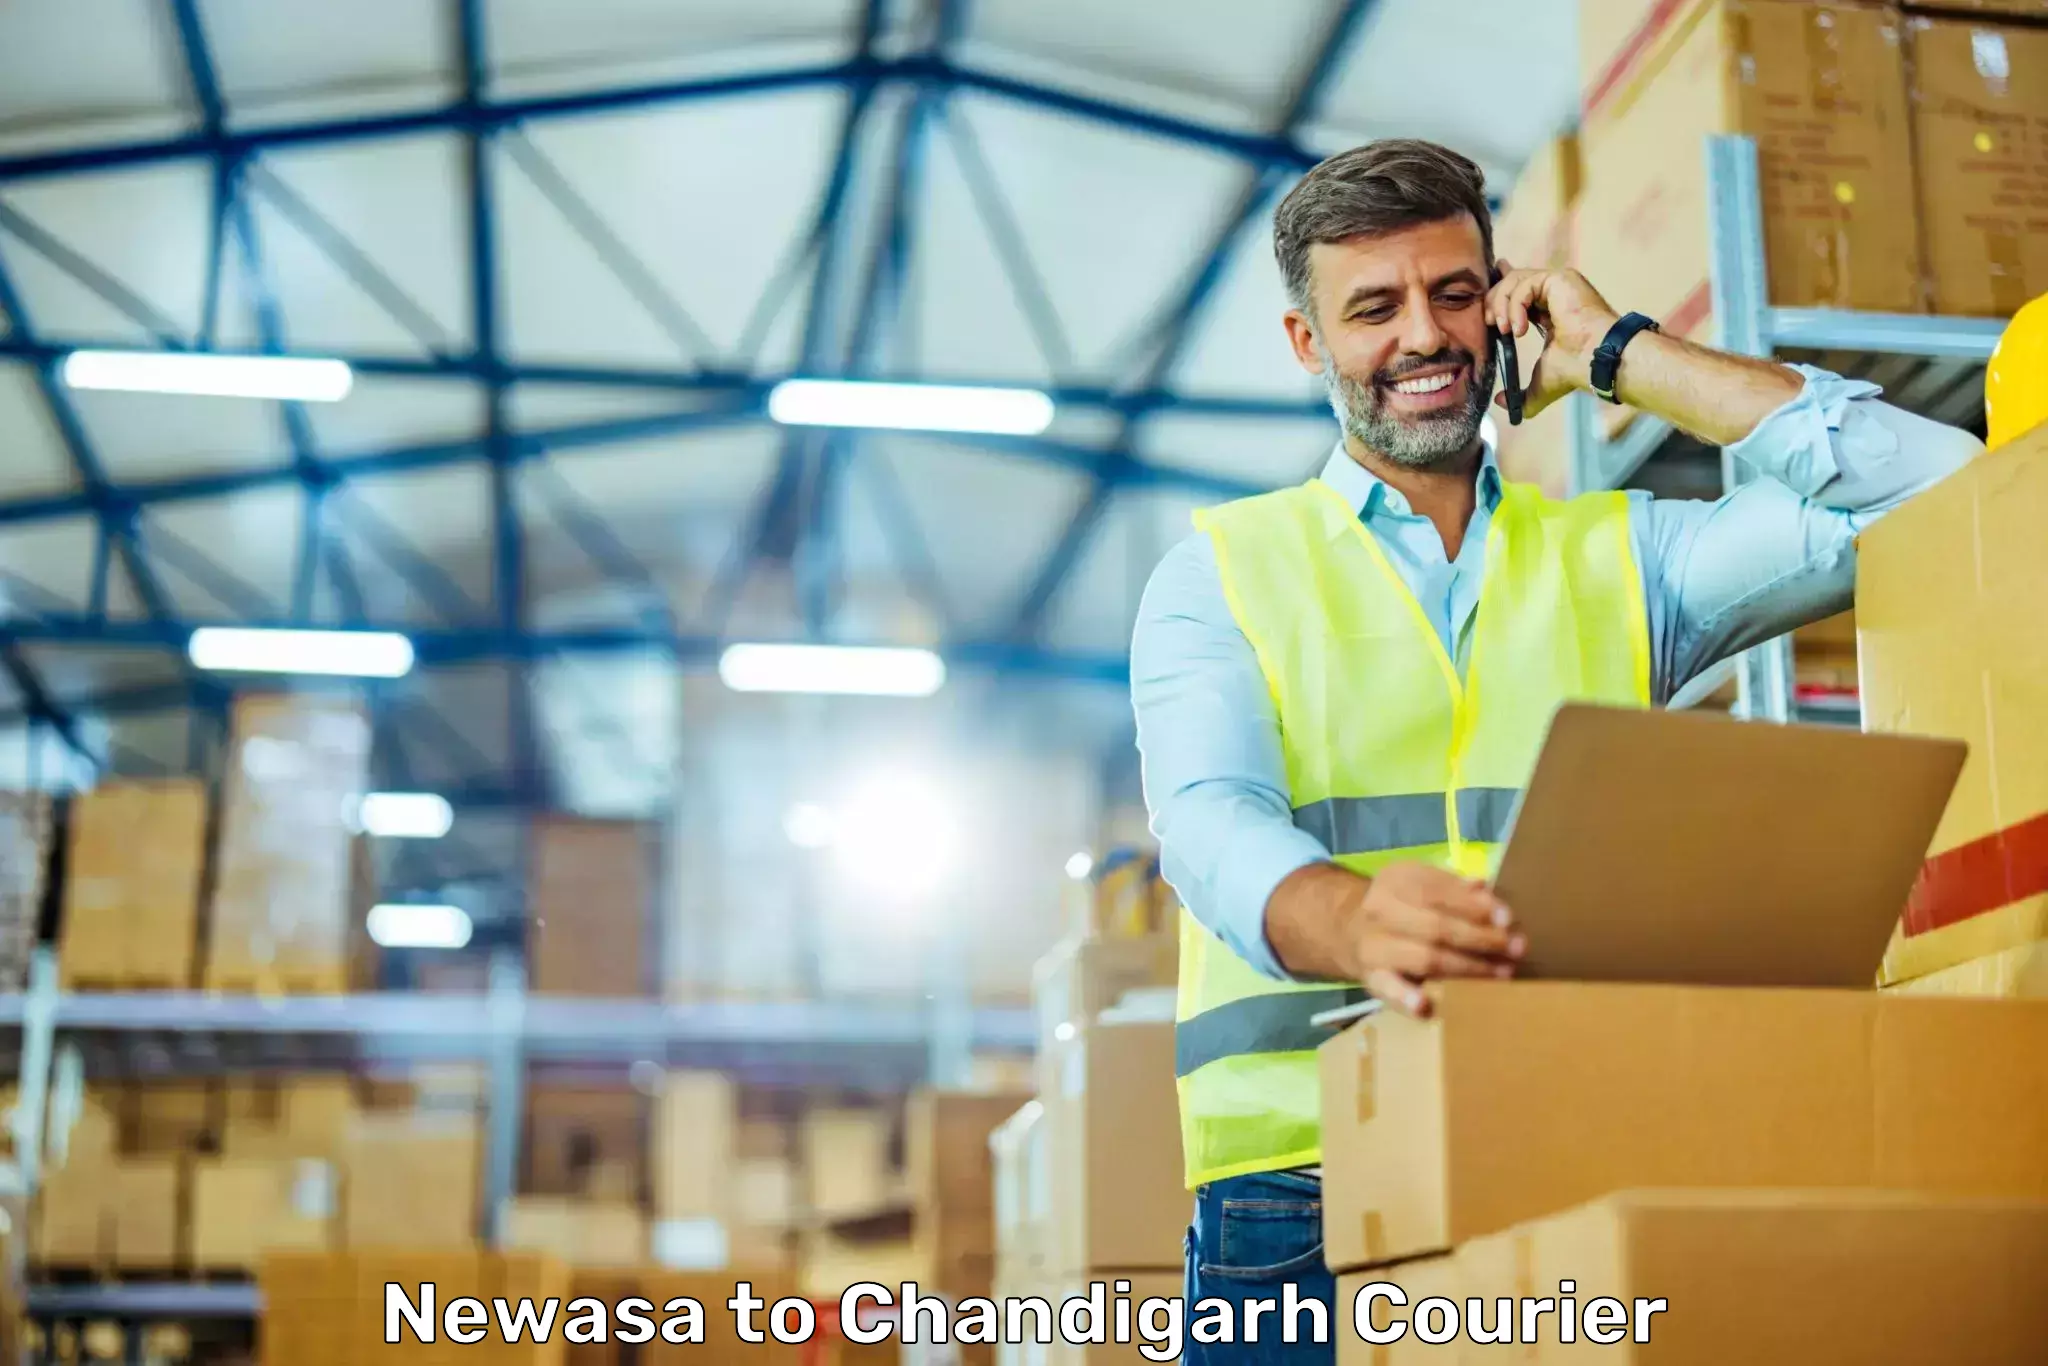 Courier service comparison Newasa to Chandigarh